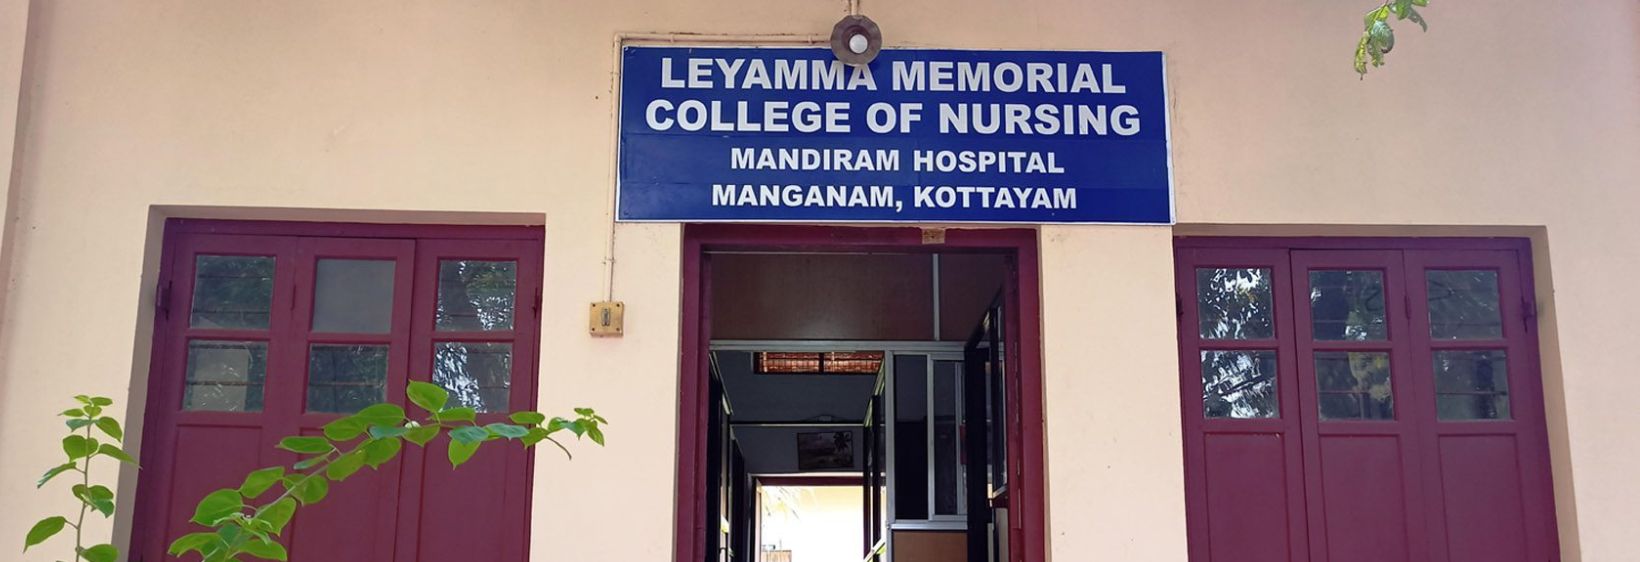 Leyamma Memorial College of Nursing - Kottayam